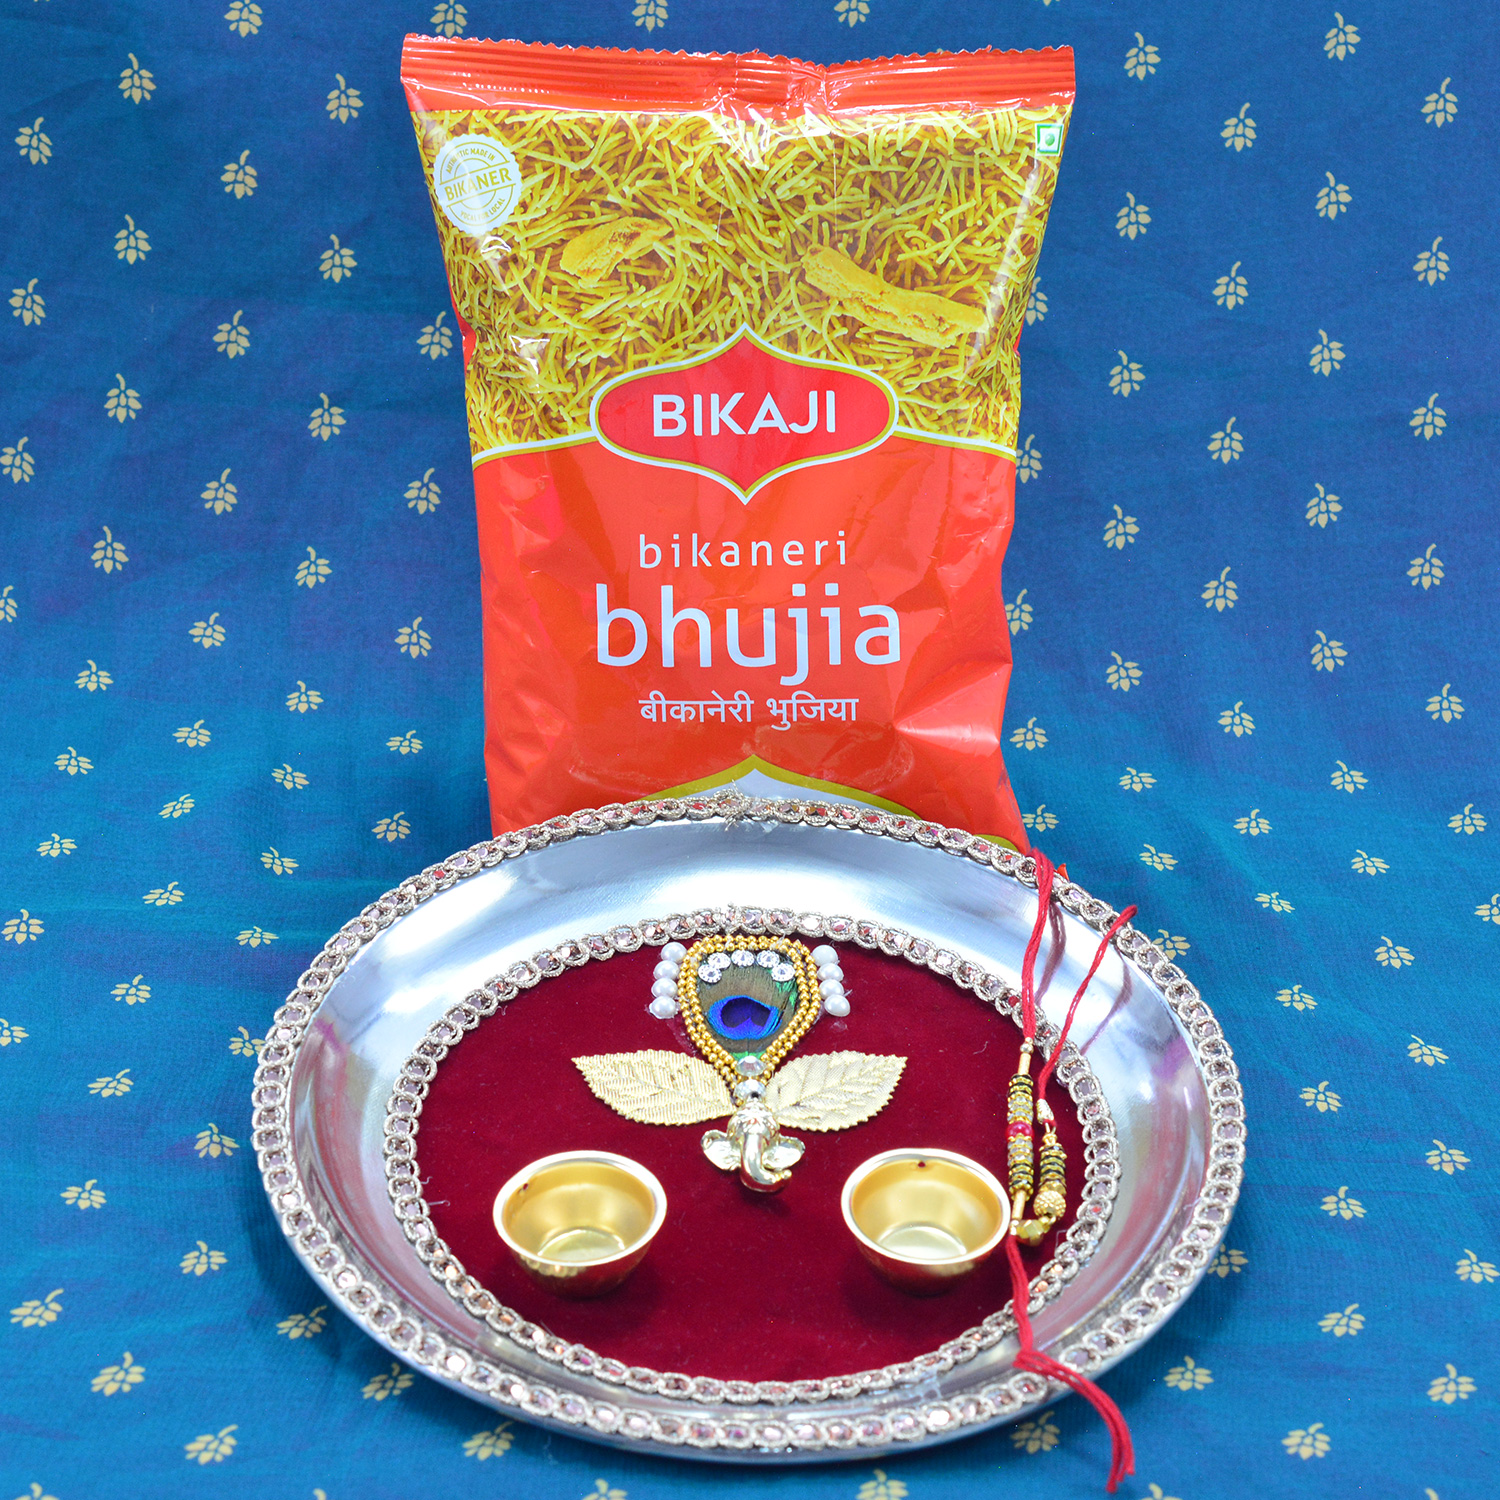 Bikaji Bhujia Small Packet Namkeen with Maroon Base Leaf and Ganesha Rakhi Pooja Thali for Raksha Bandhan